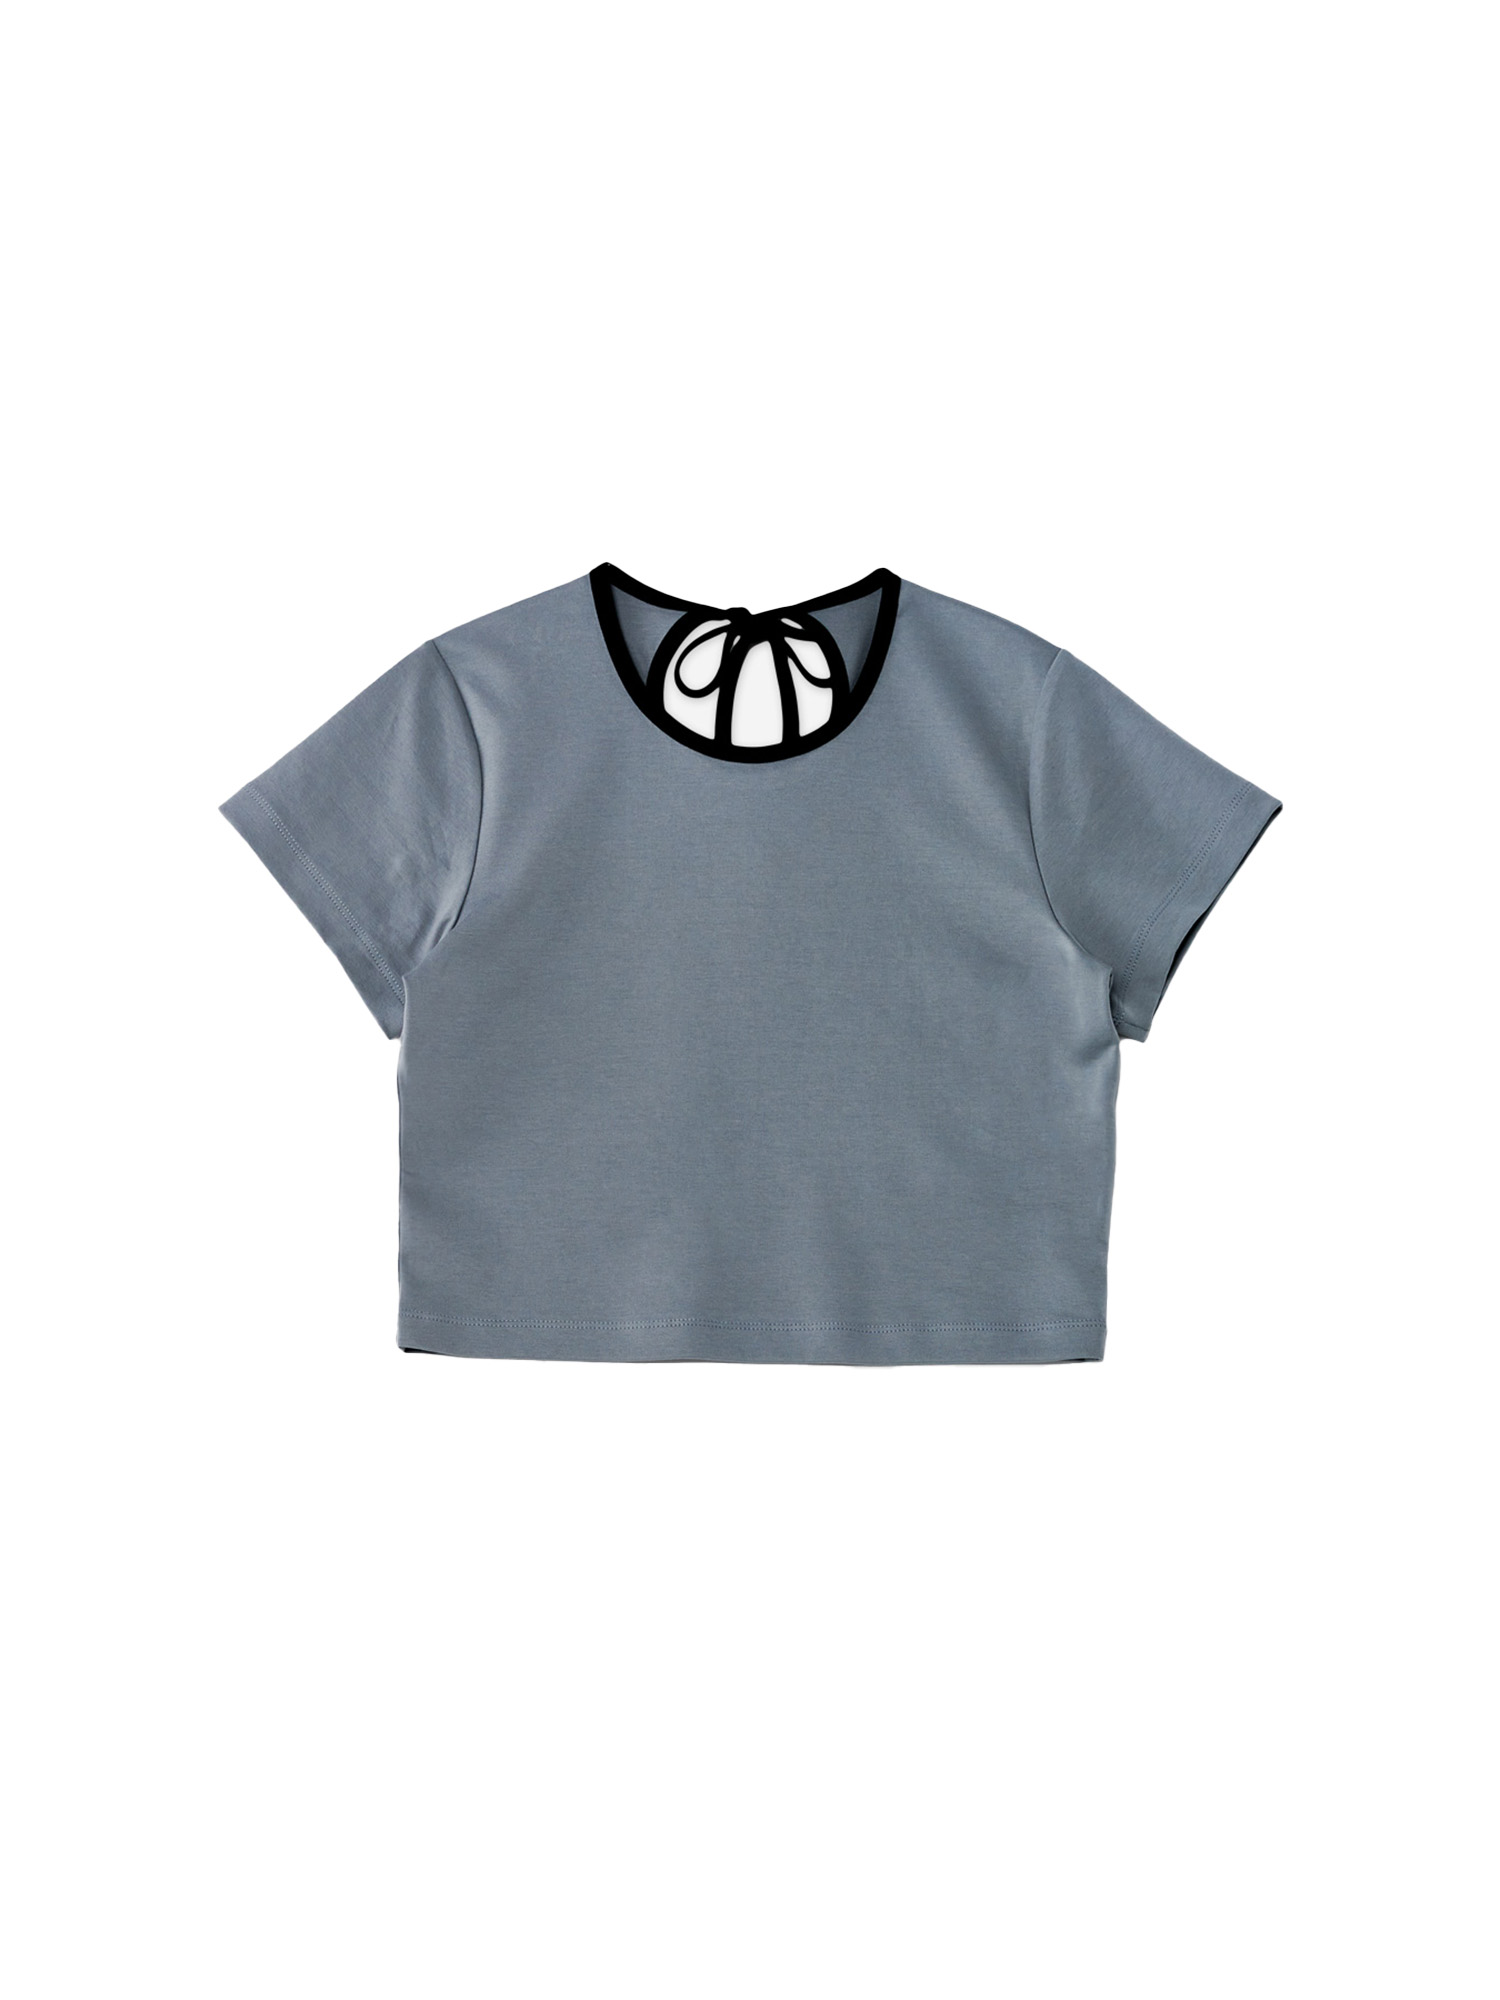 Eclipse T-Shirt (2colors) - Moss gray